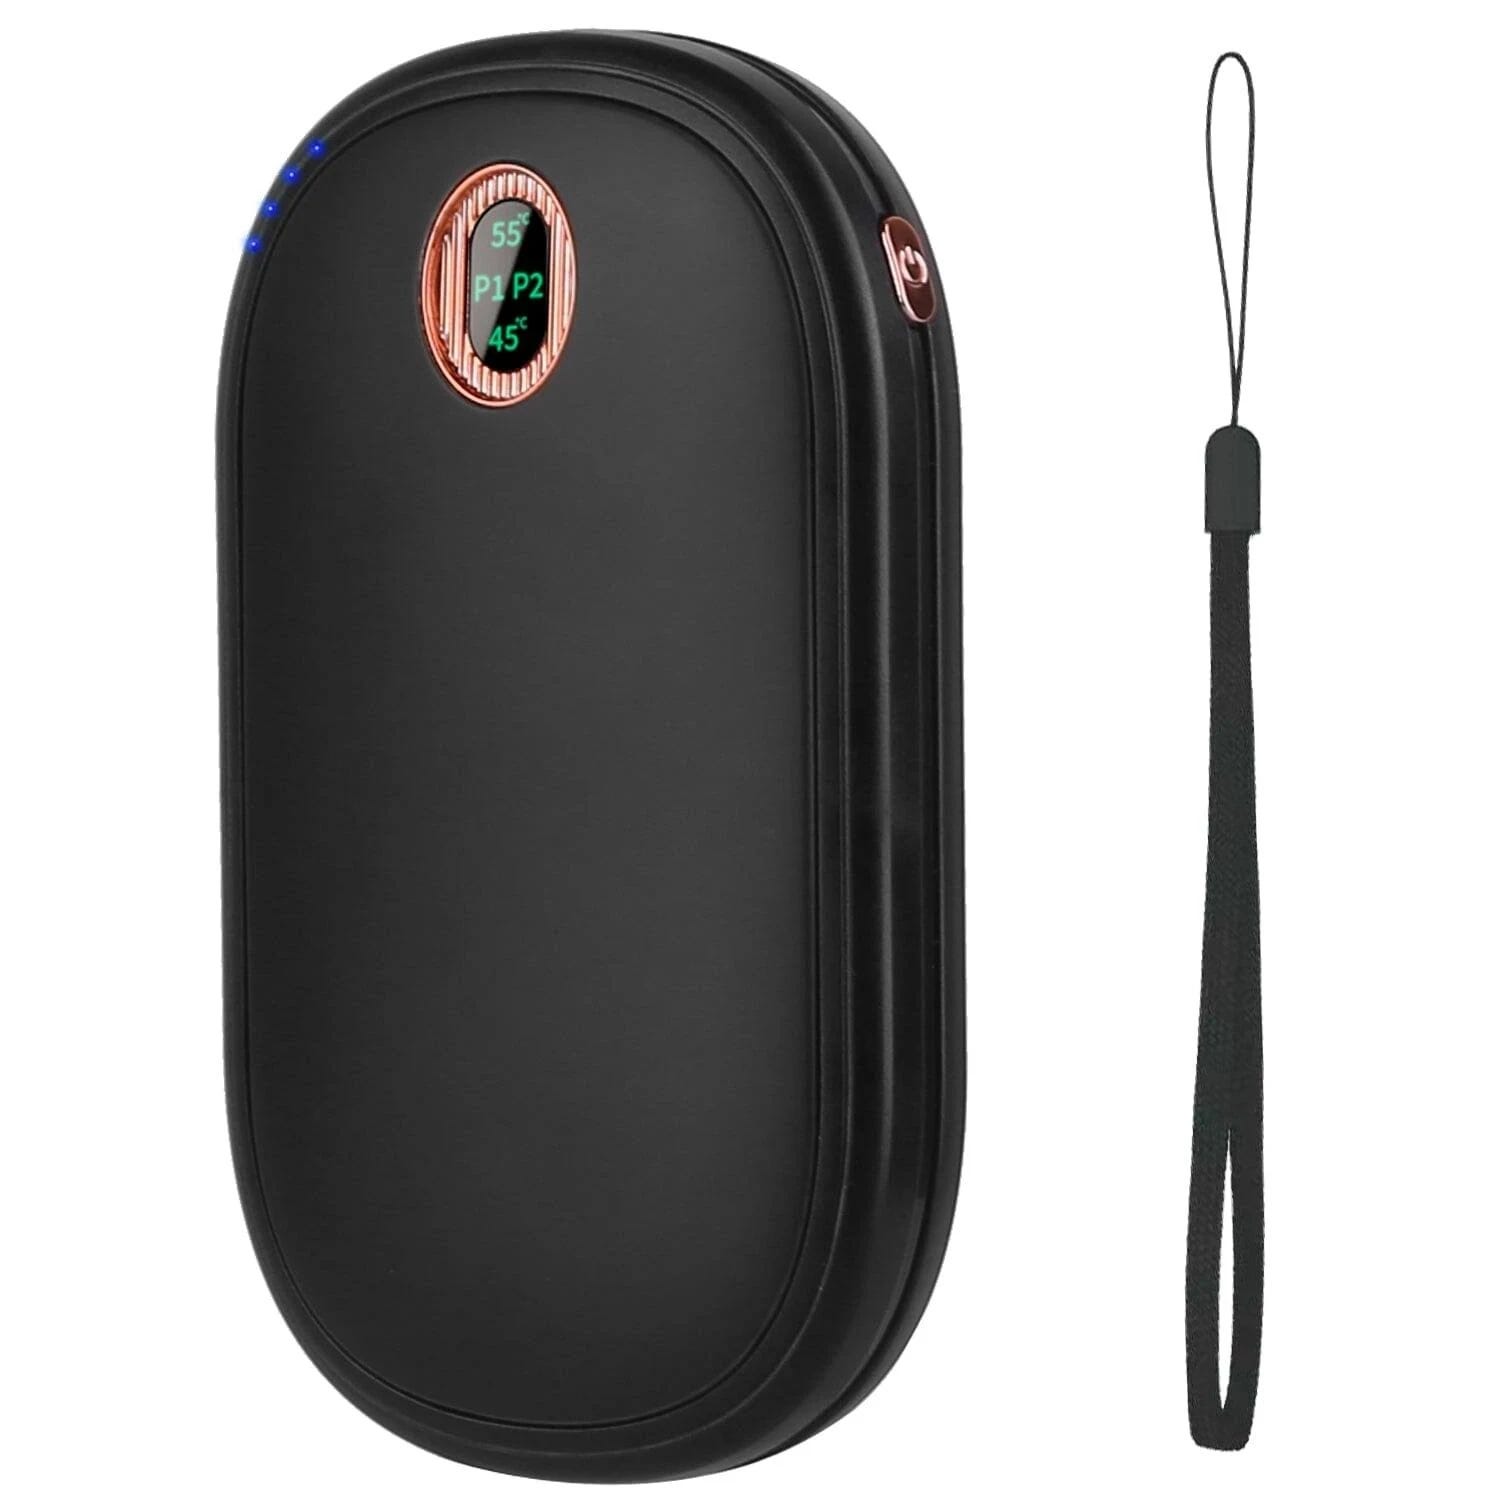 iMounTEK Portable Rechargeable Electric Hand Warmer Black | Image